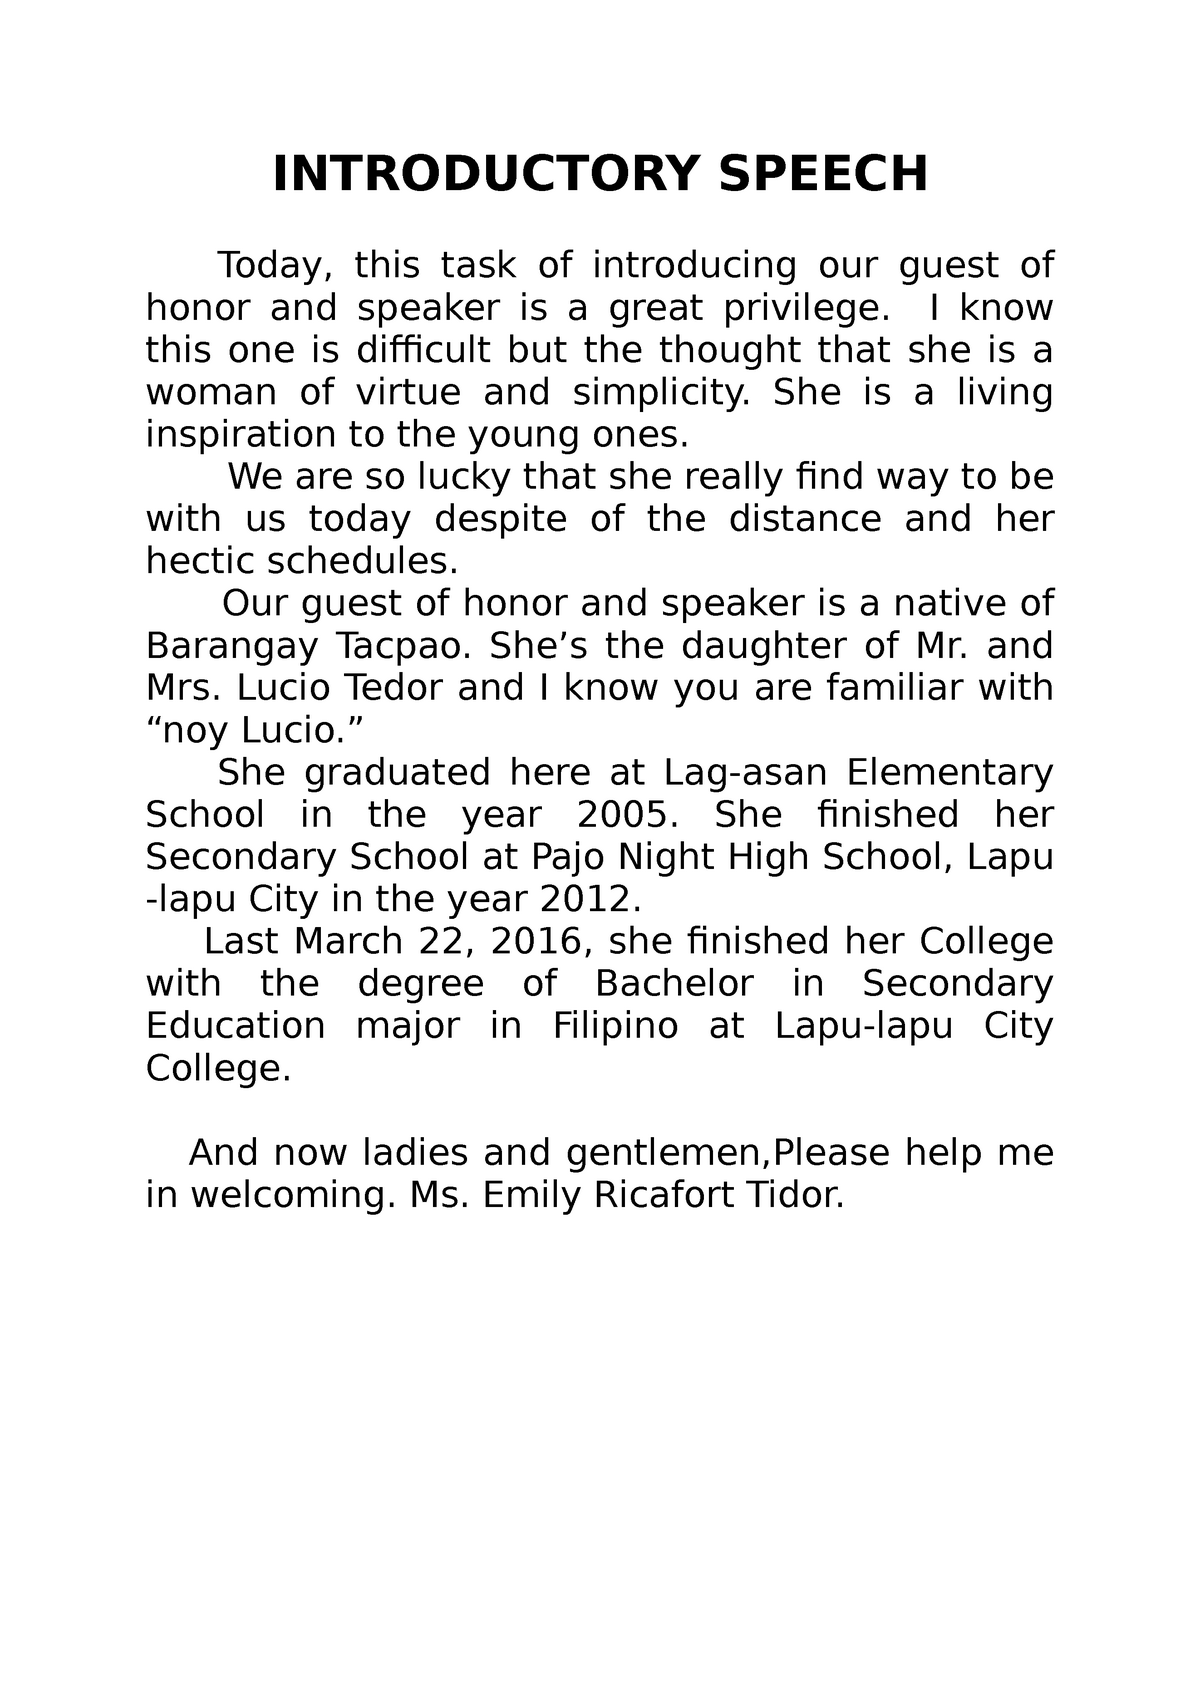 guest speaker speech for elementary graduation tagalog